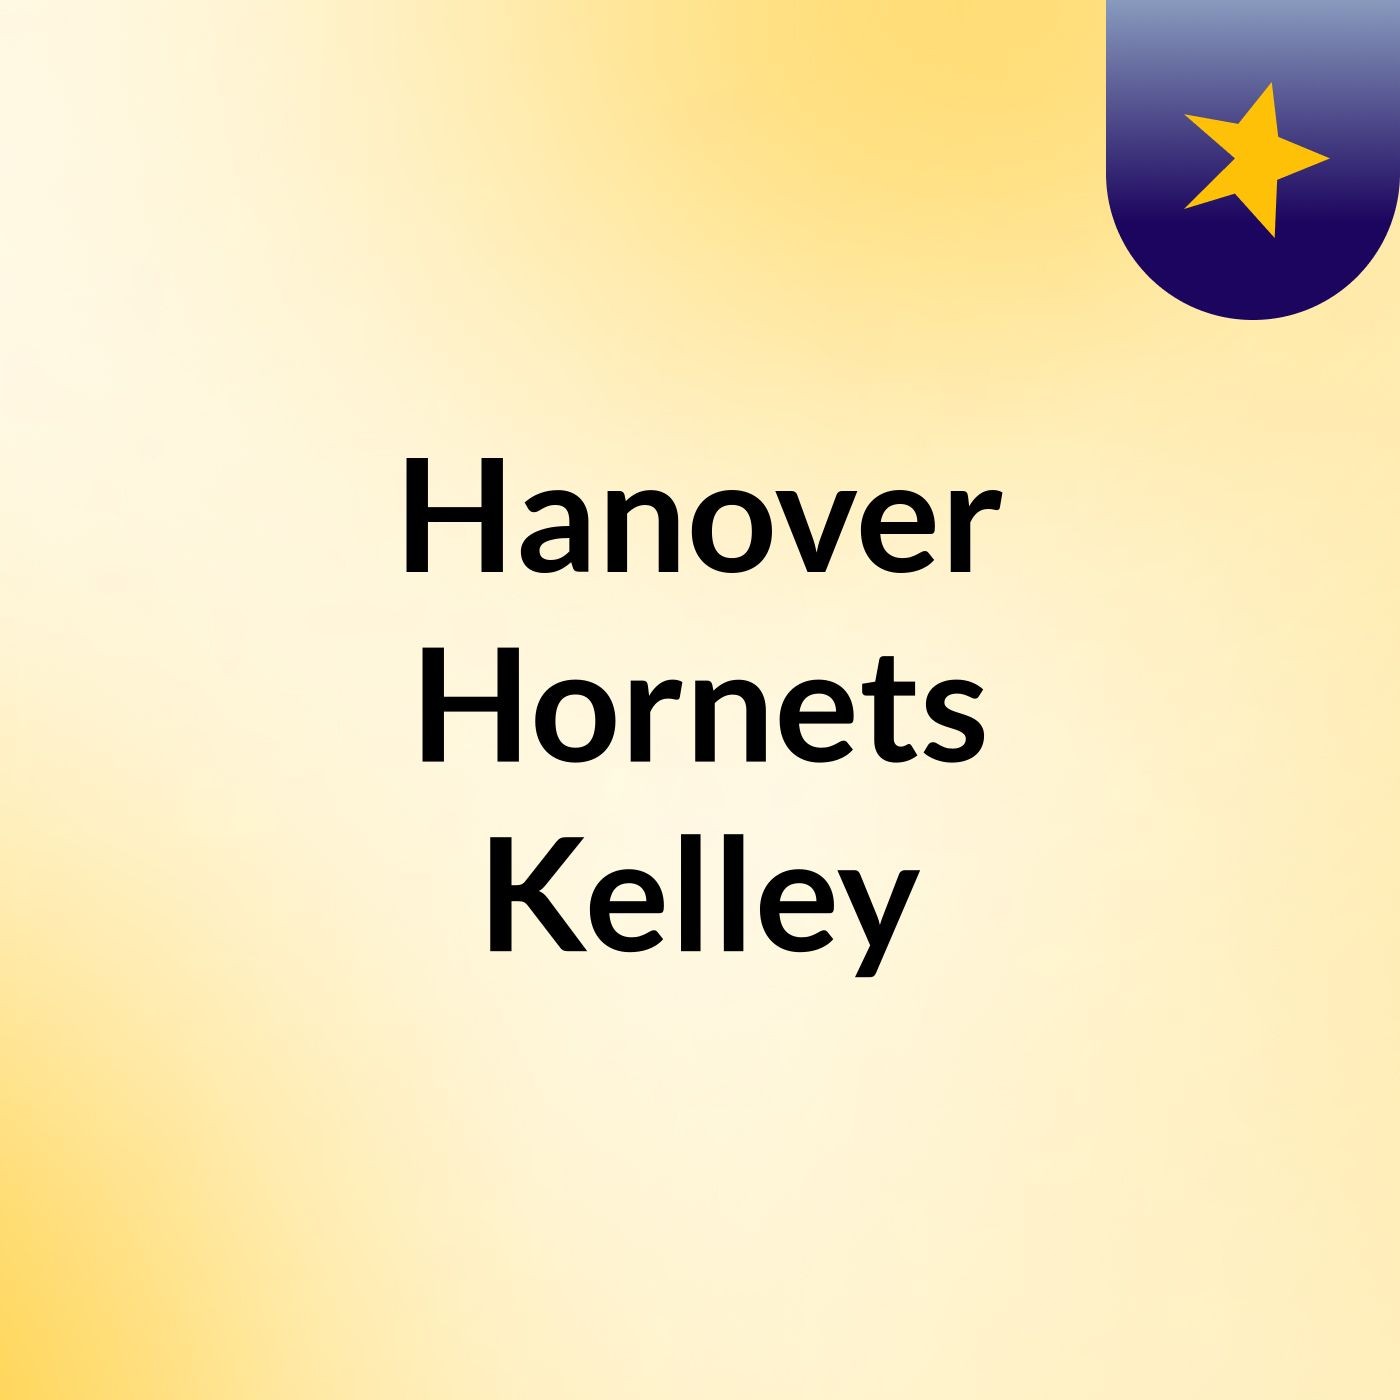 Hanover Hornets Kelley